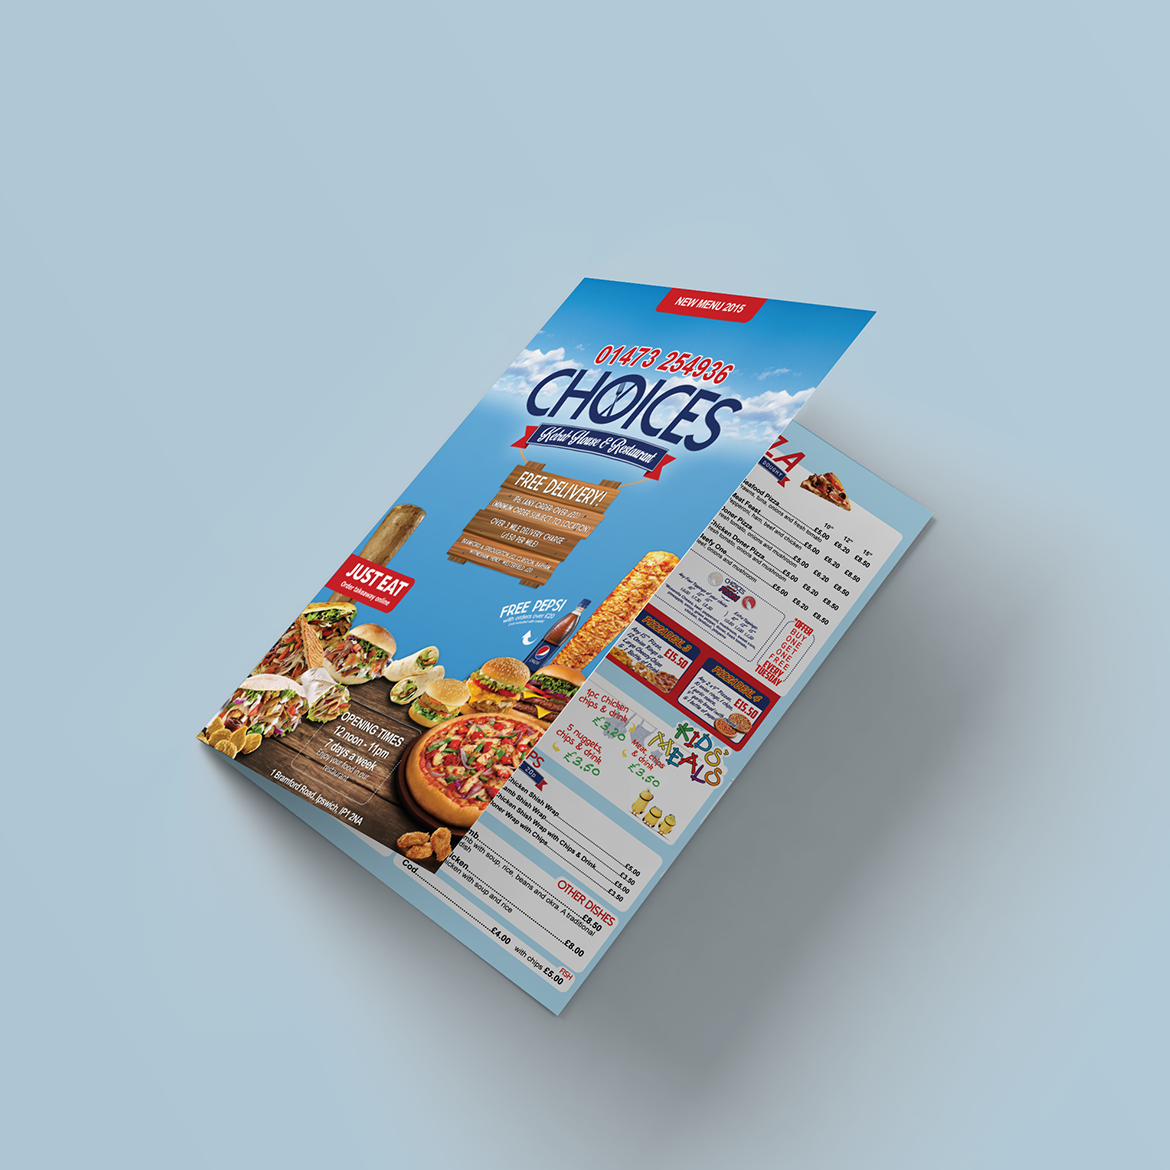 Choices Kebab House menu design